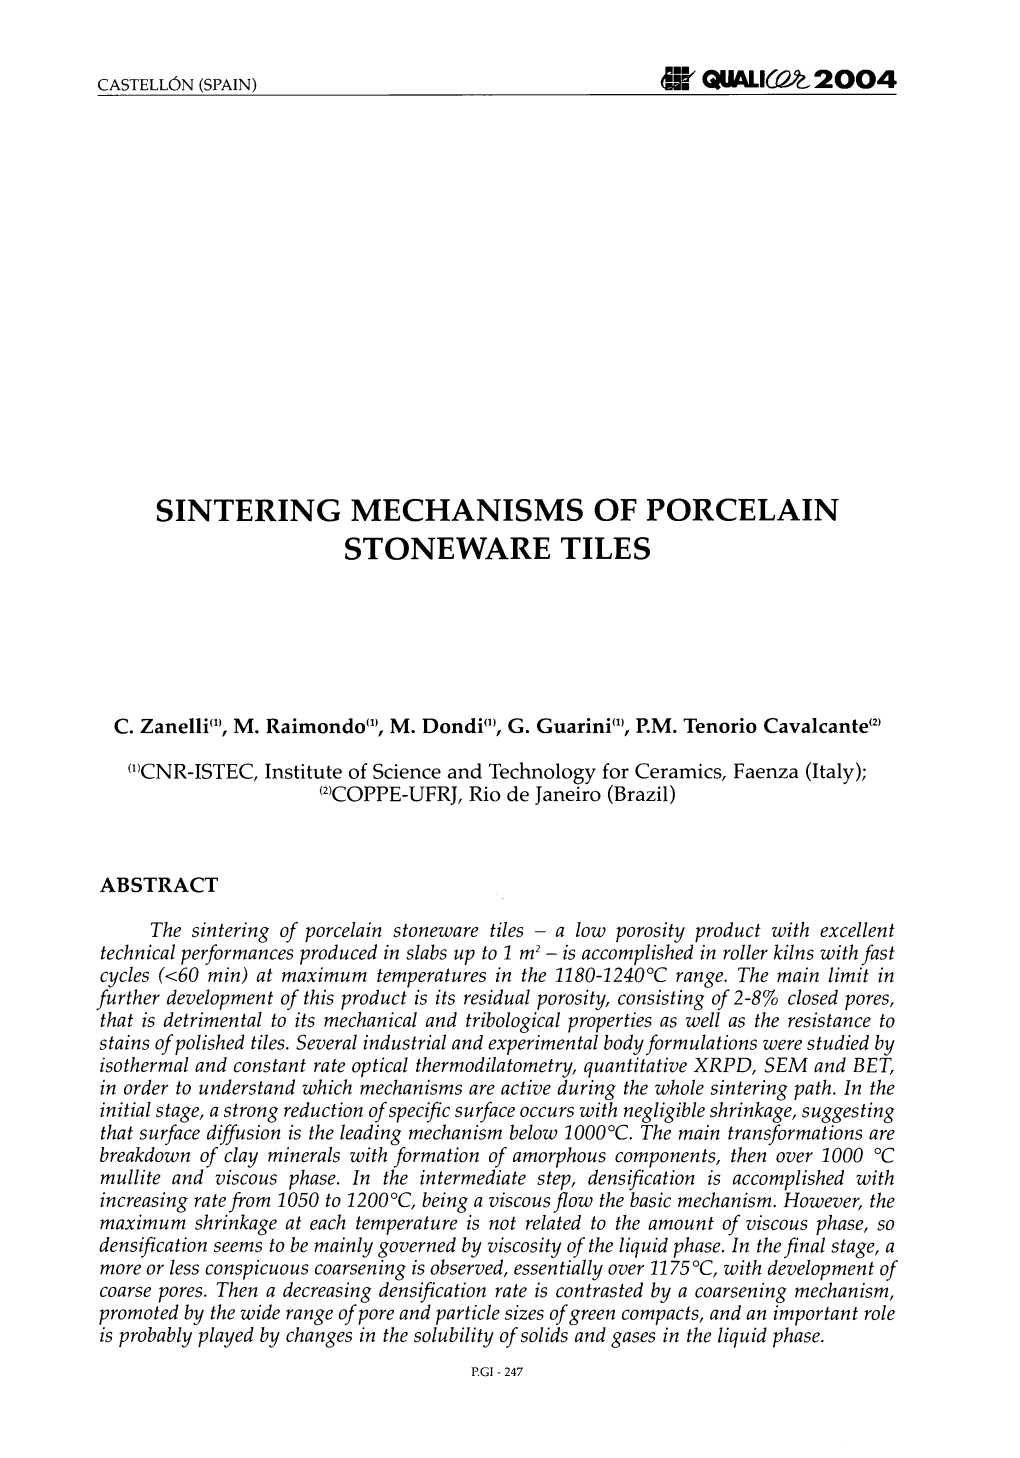 Sintering Mechanisms of Porcelain Stoneware Tiles